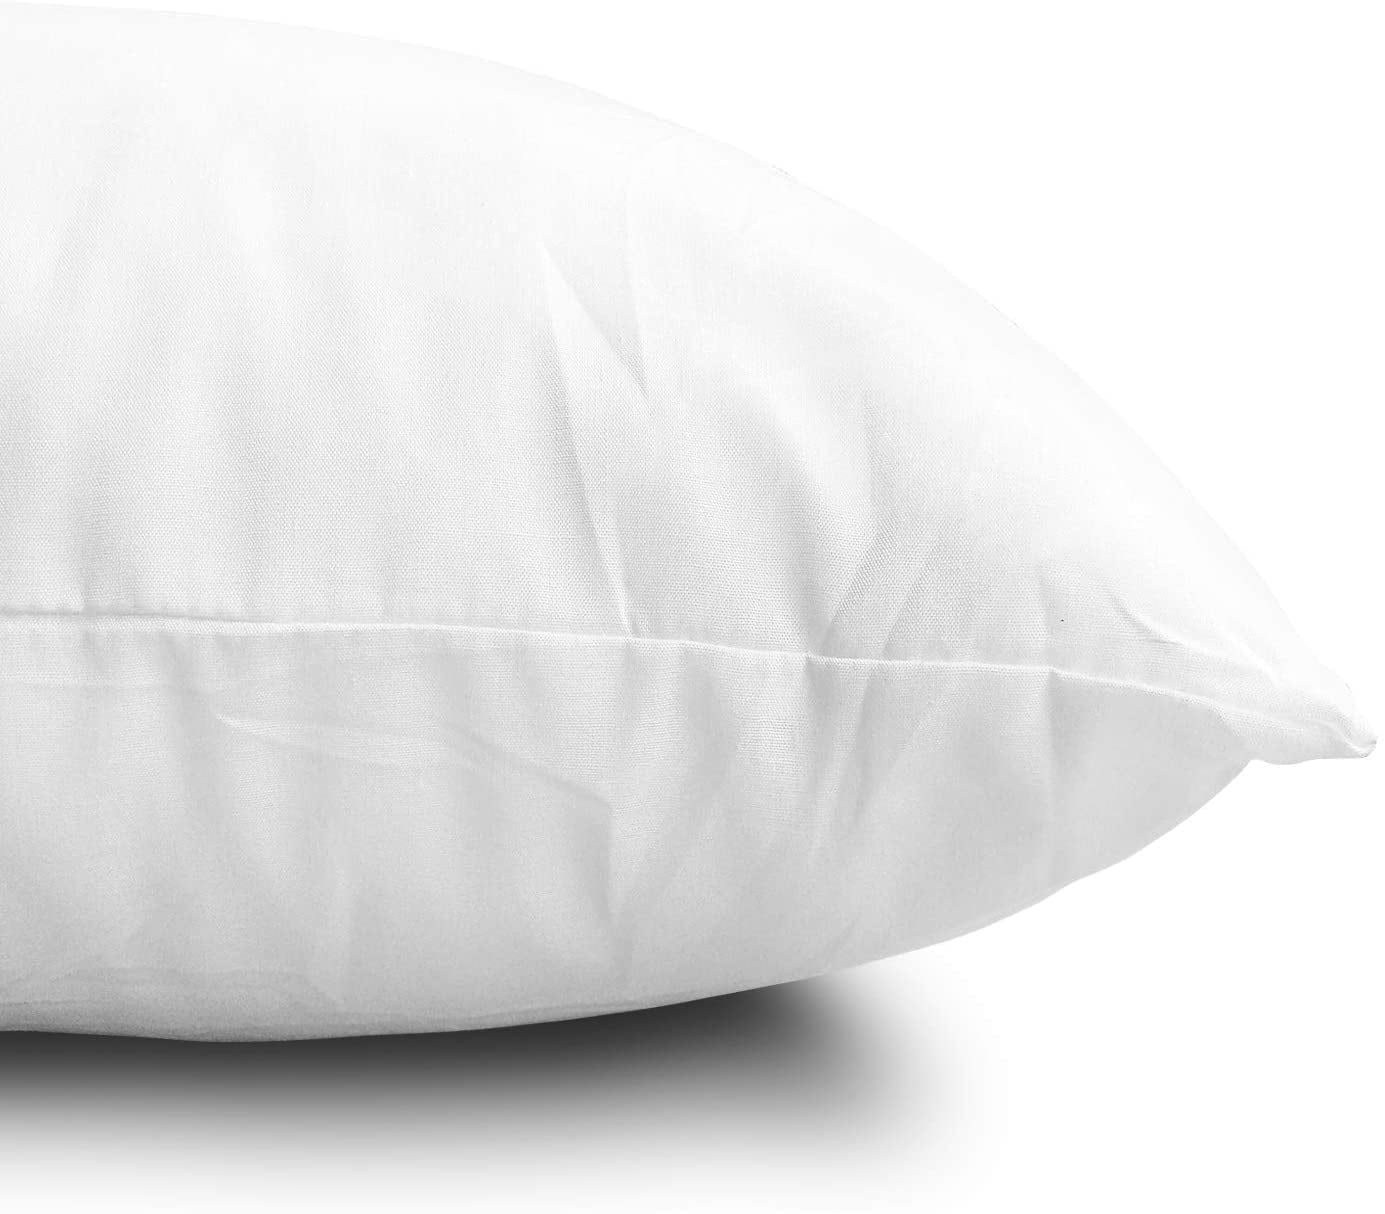 EDOW Throw Pillow Insert LightweightSoft Polyester Down Alternative Decorative Pillow Sham Stuffer Machine Washable (White 18x18)